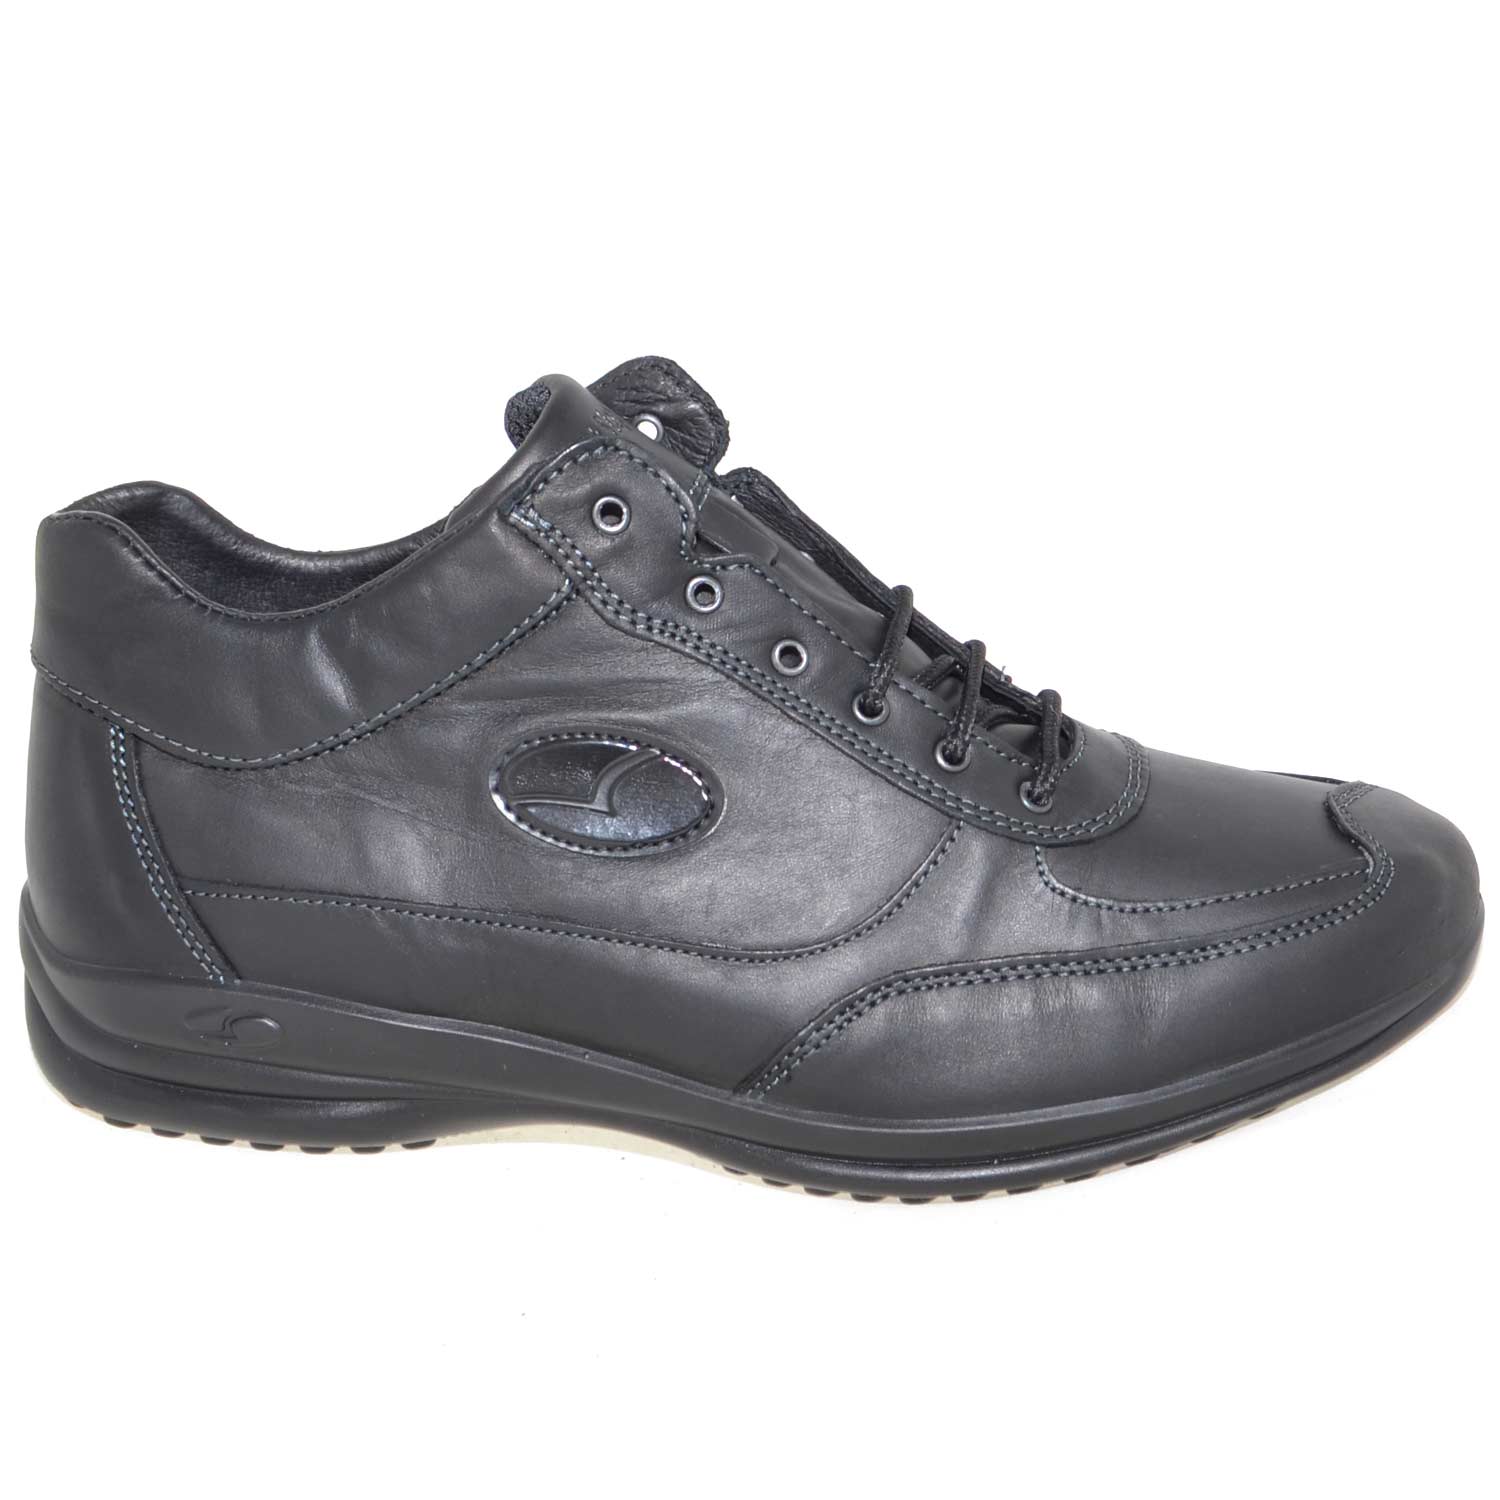 Sneakers Sportive Scarpe nere Uomo Light Step GRISPORT  Made in Italy Man Shoes comfort tessuto leggero e comode